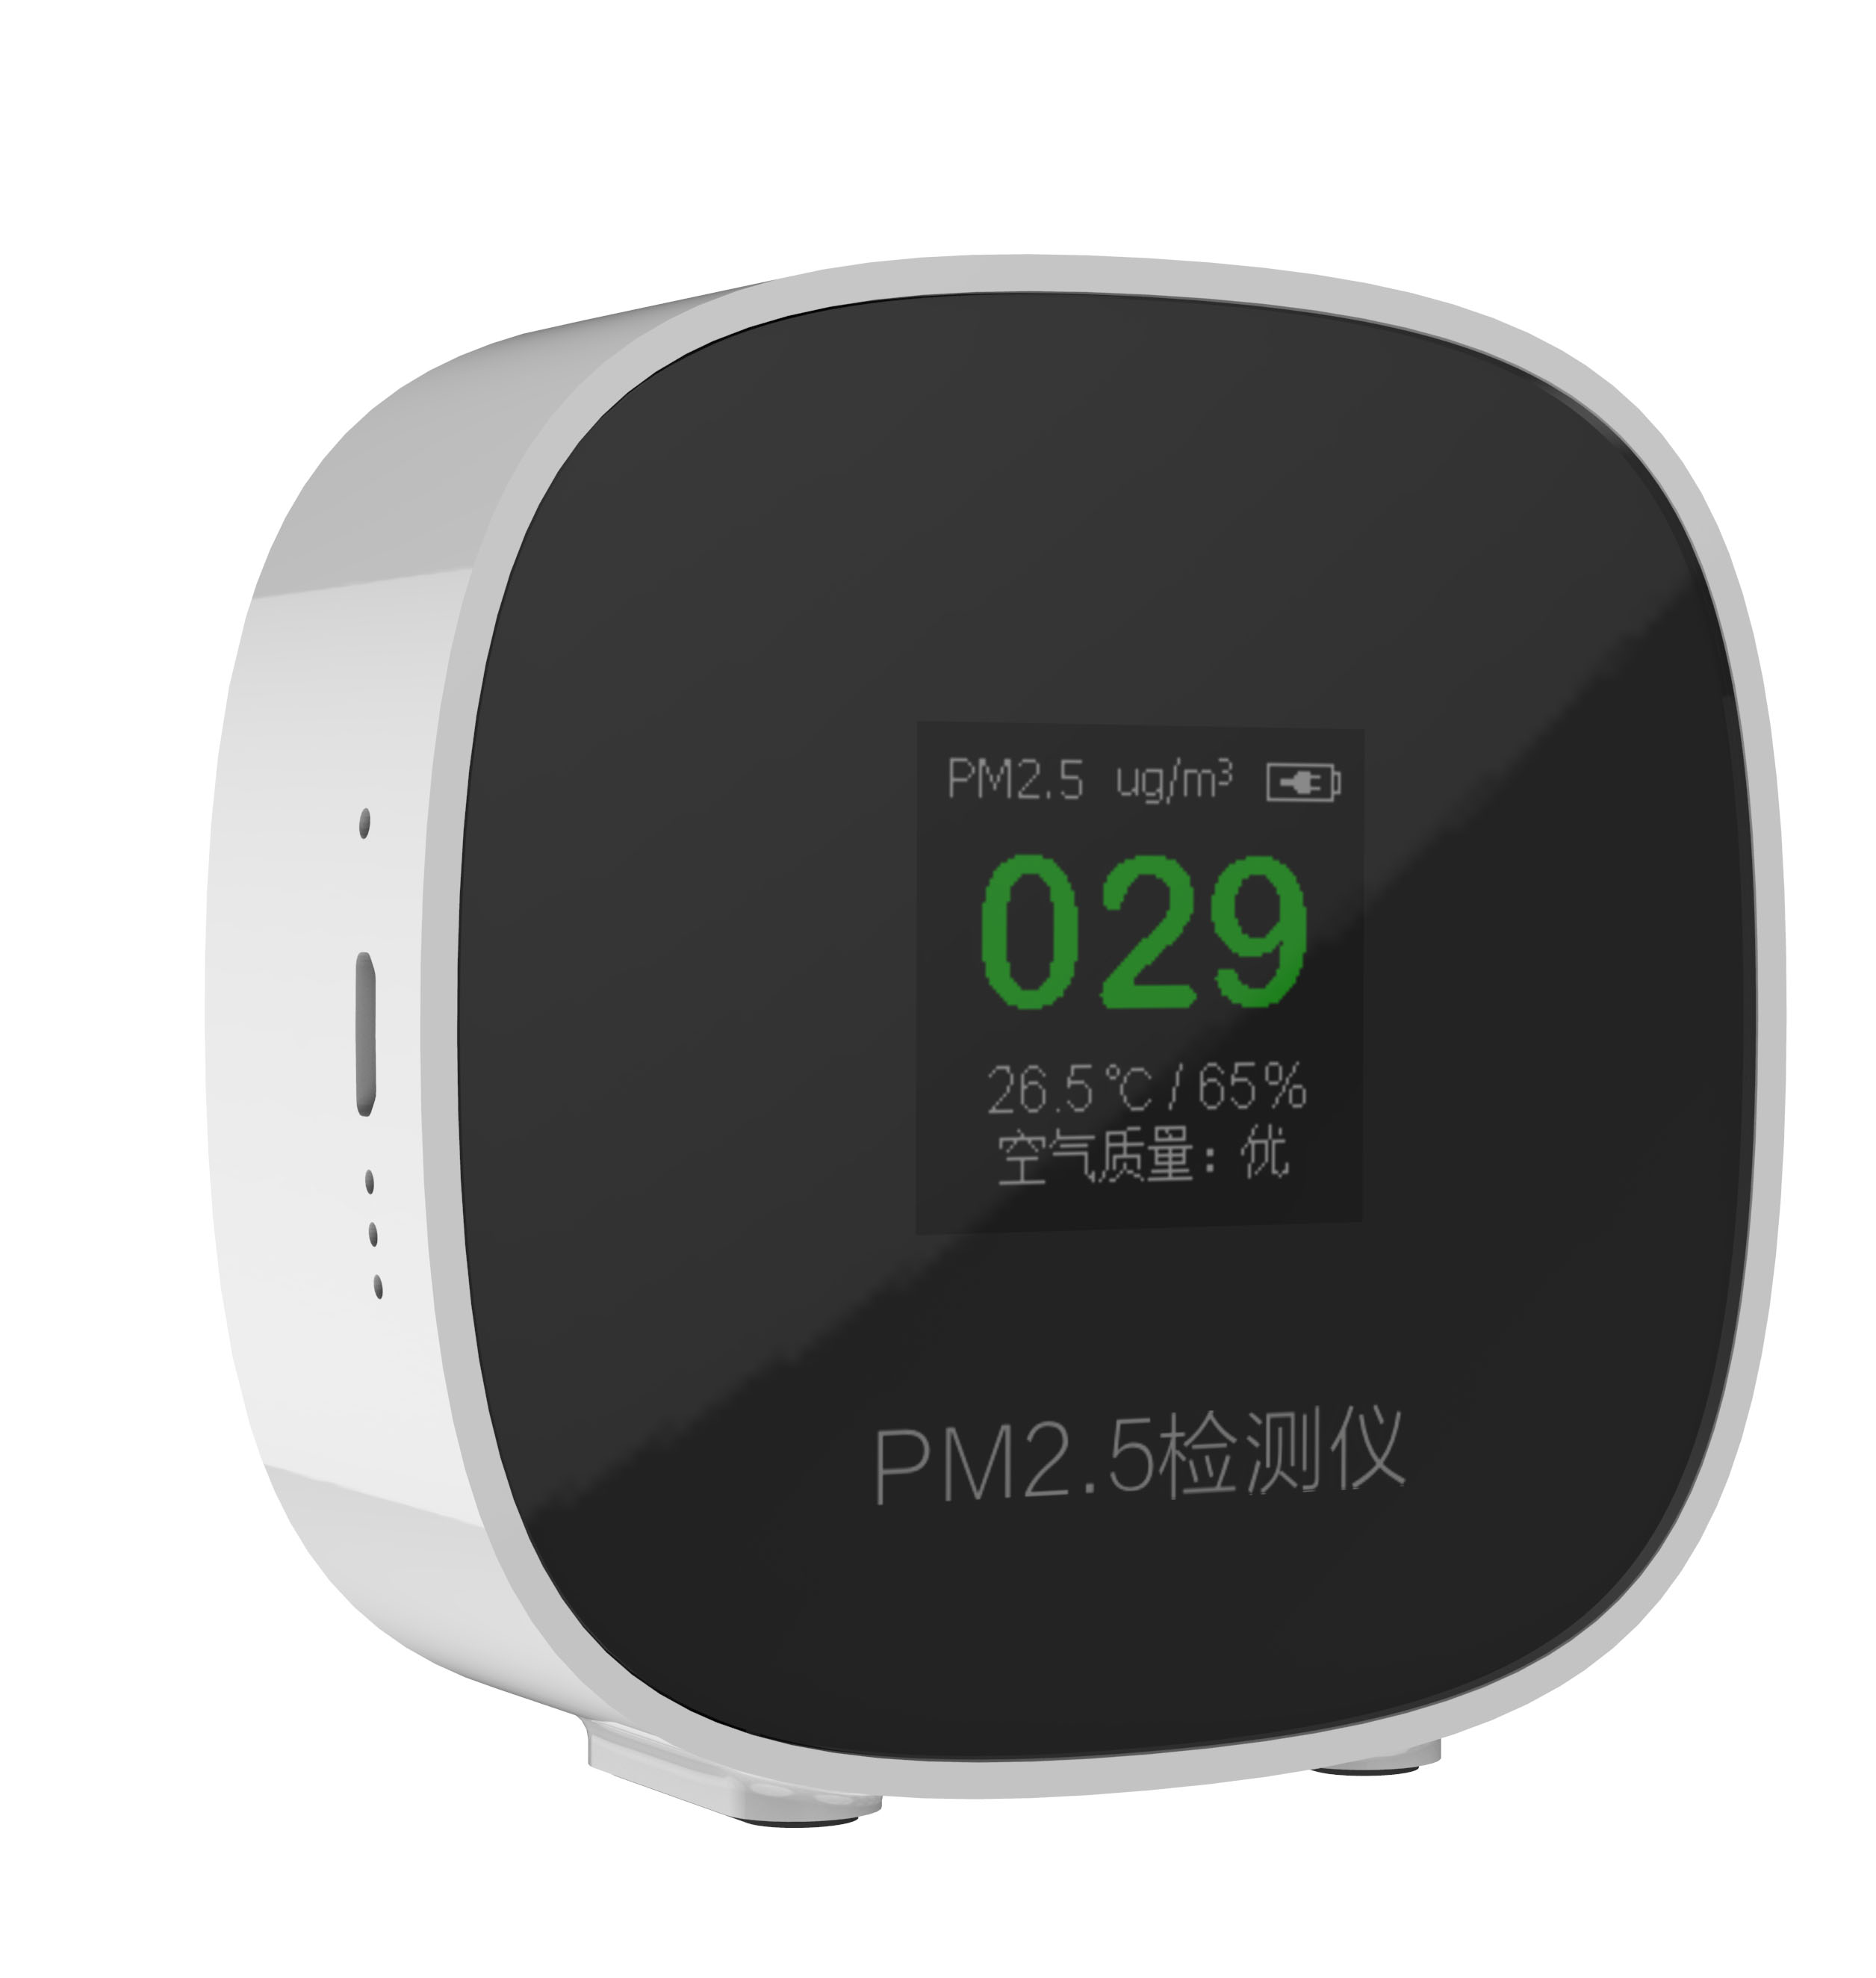 PM2.5 detector